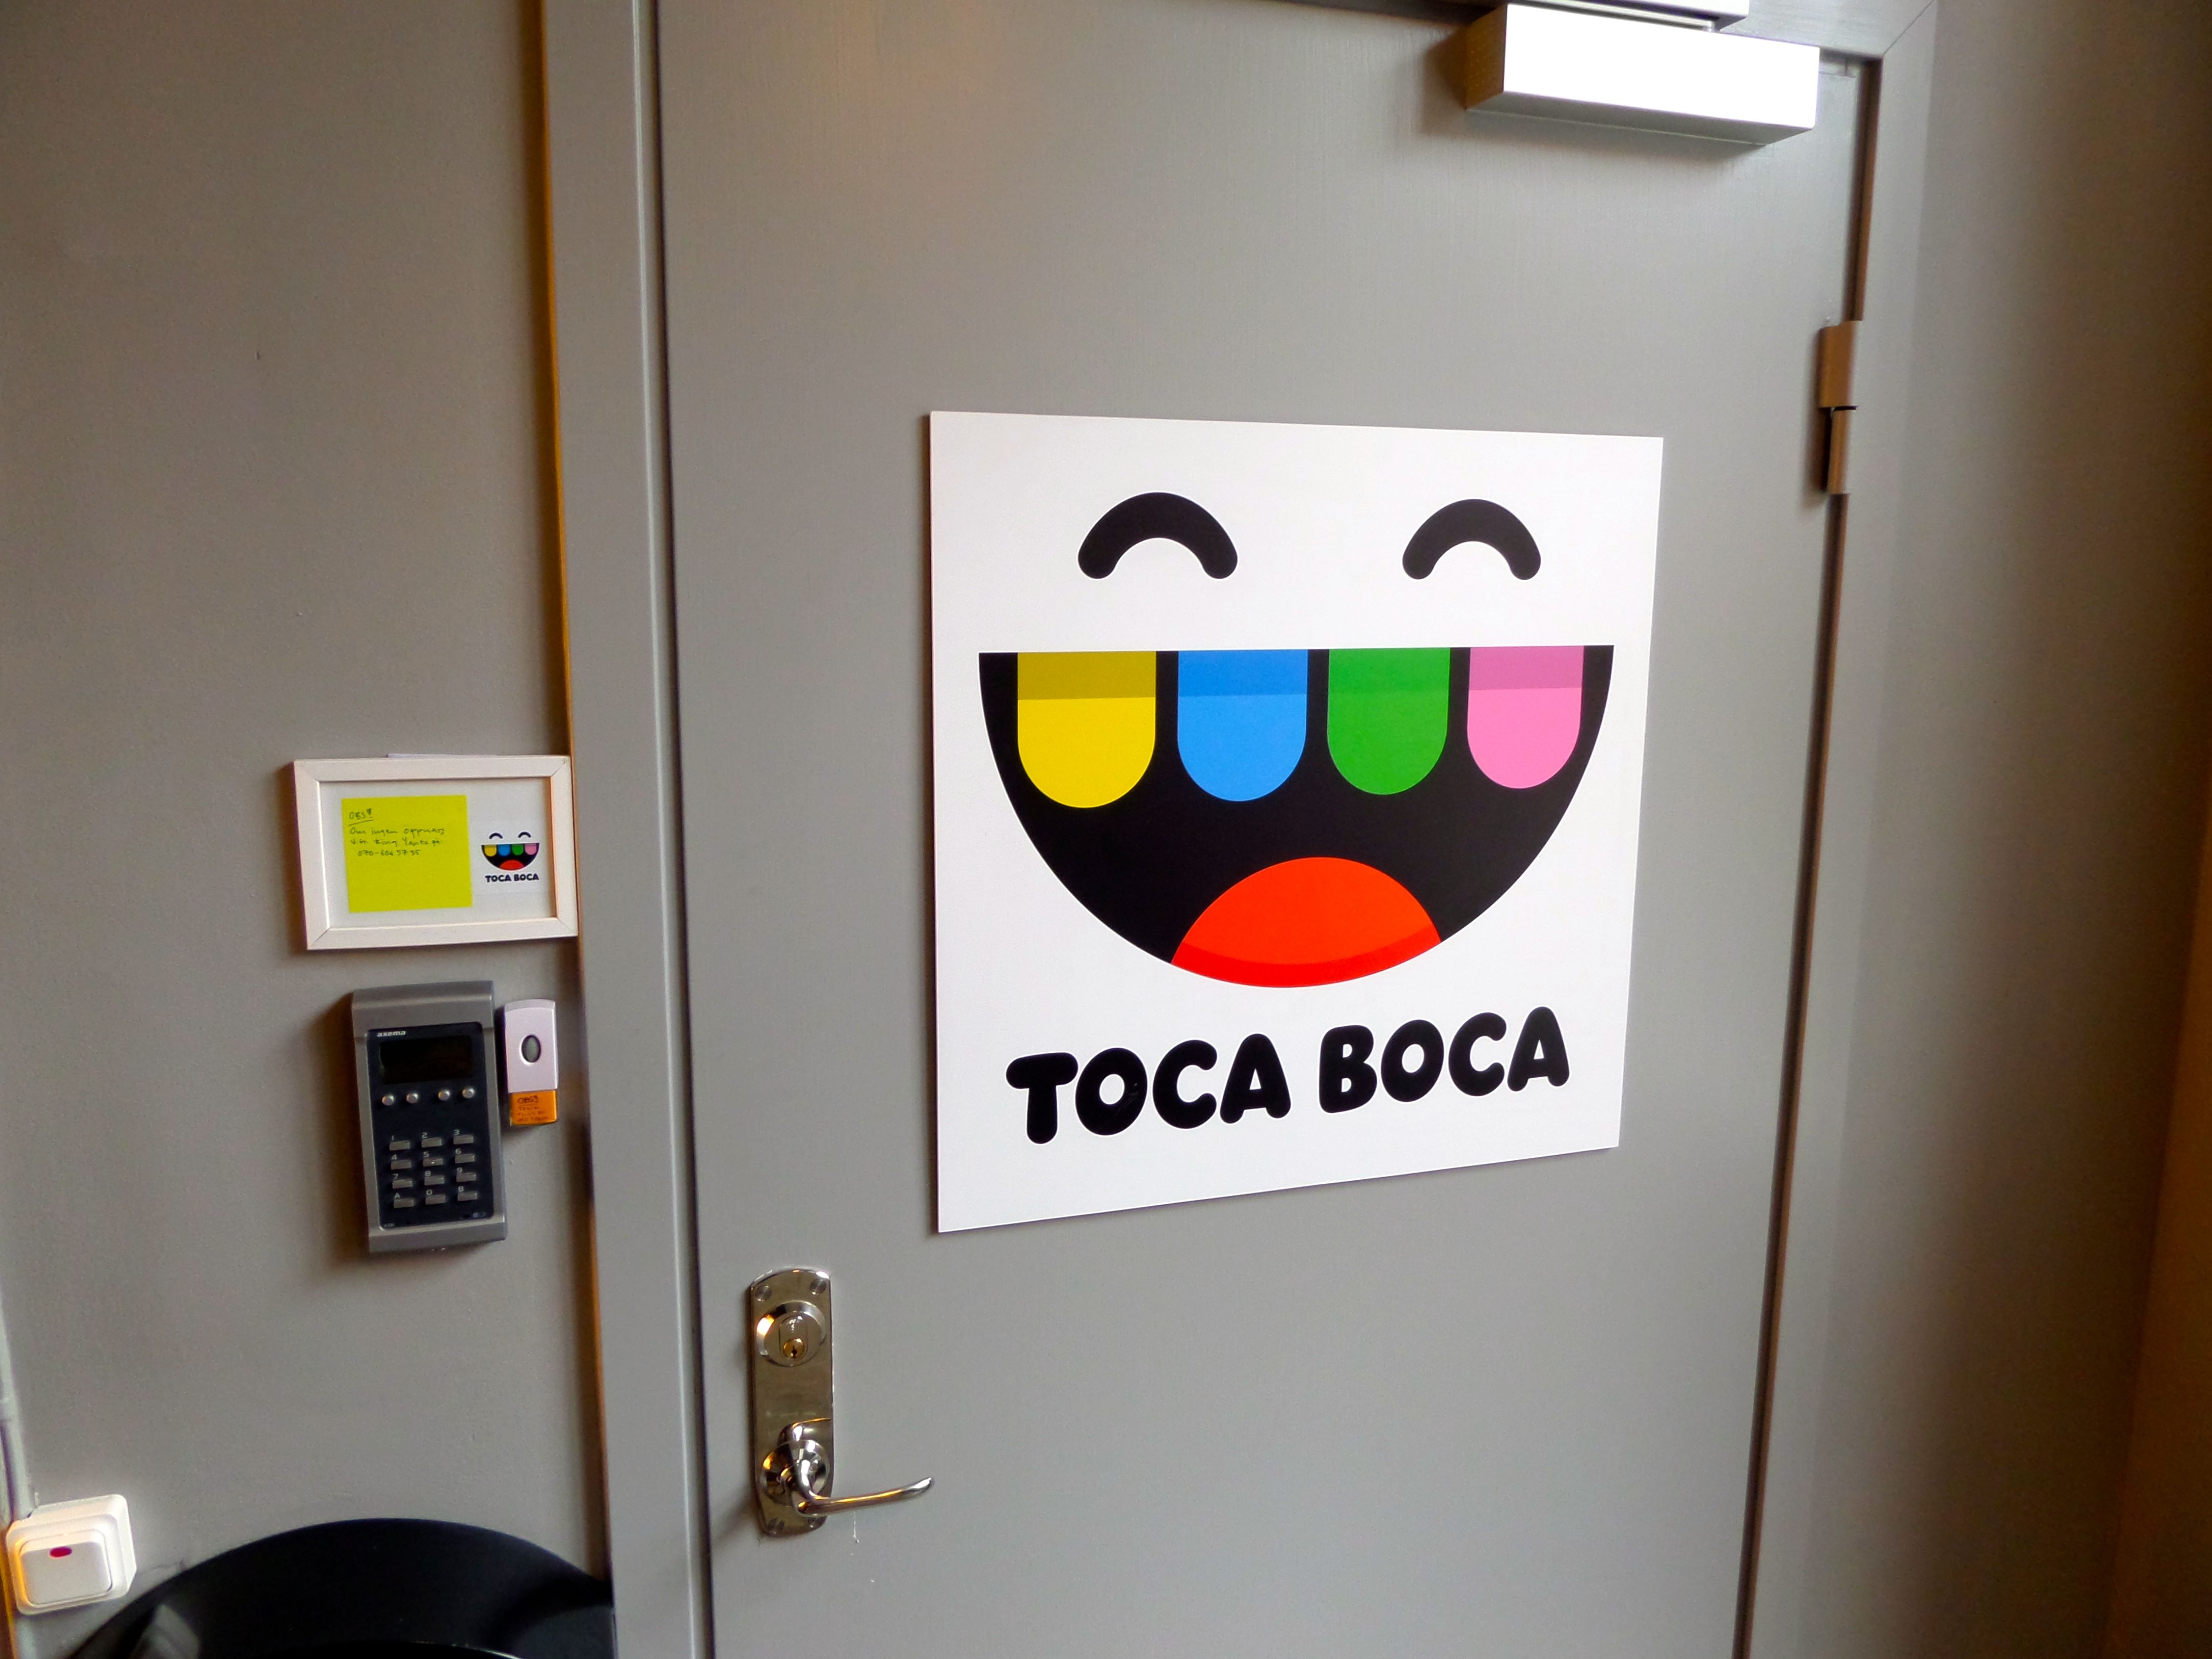 Toca Boca offices